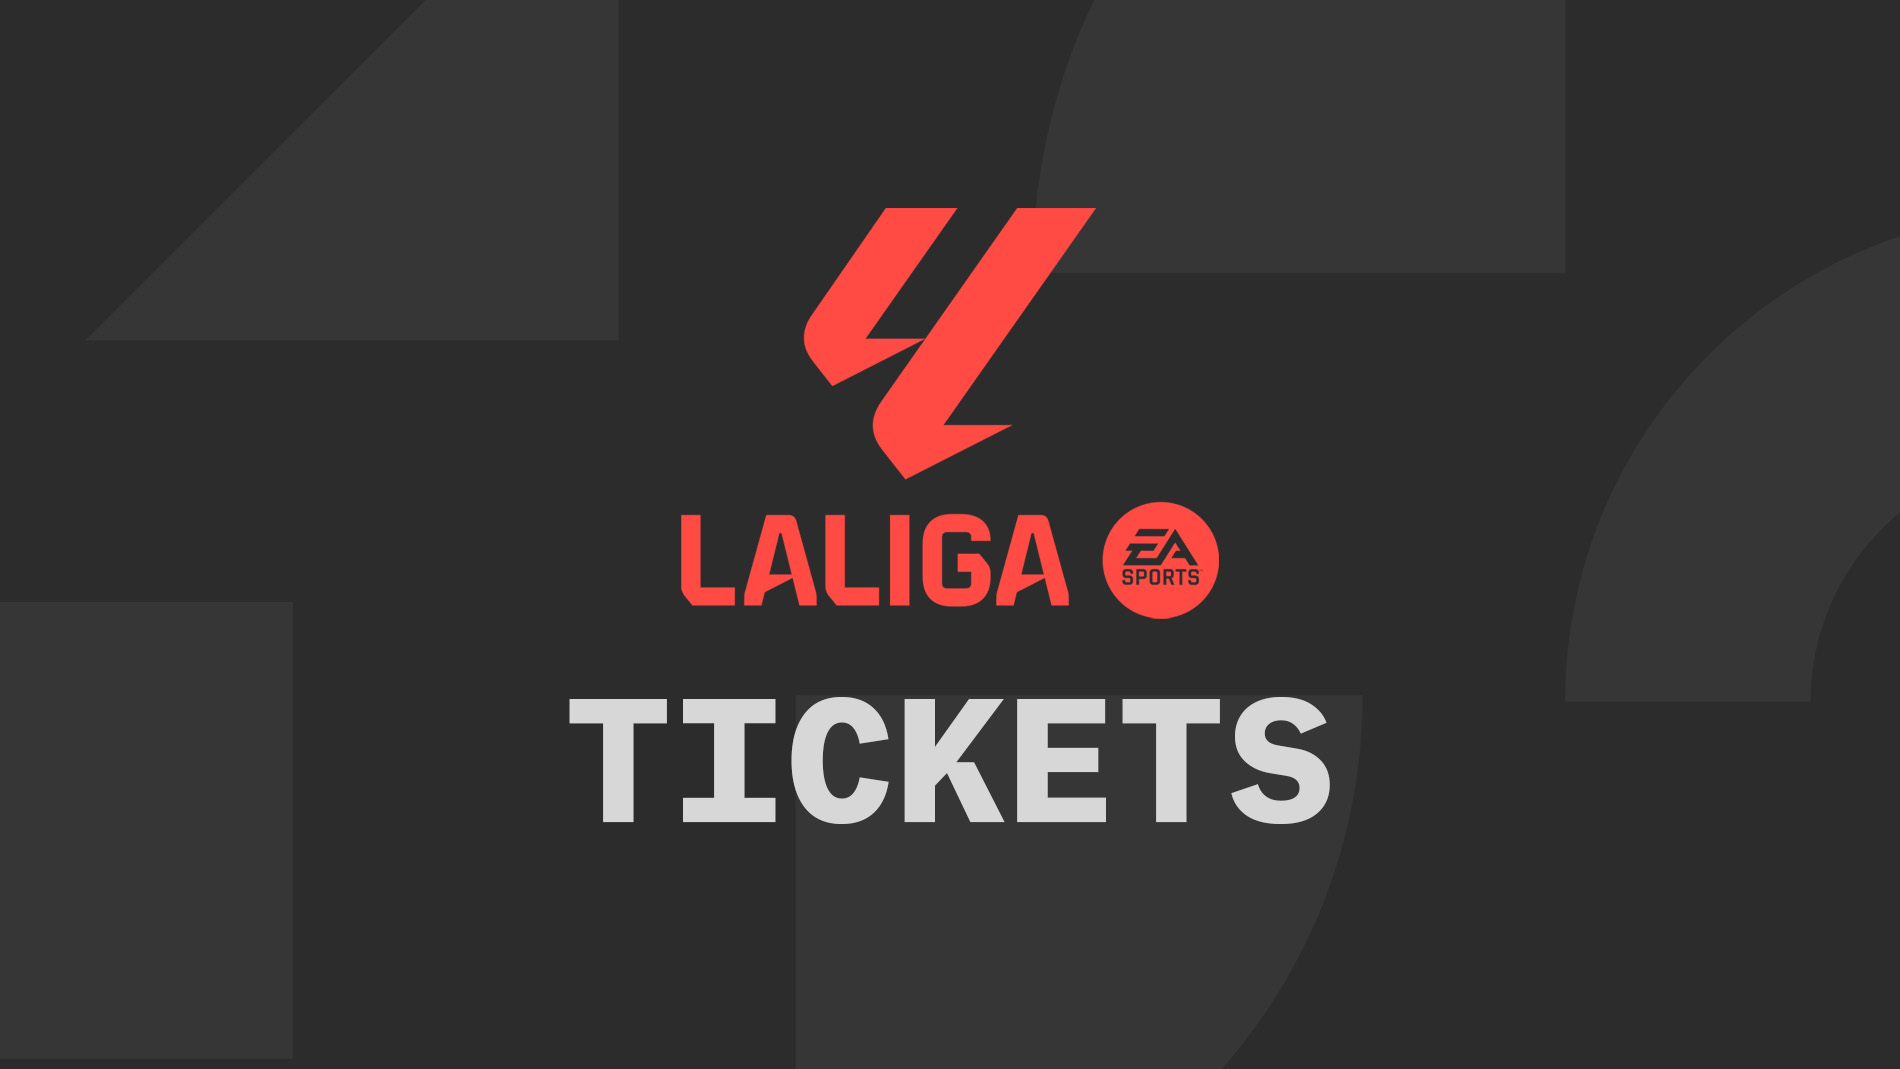 LaLiga Tickets